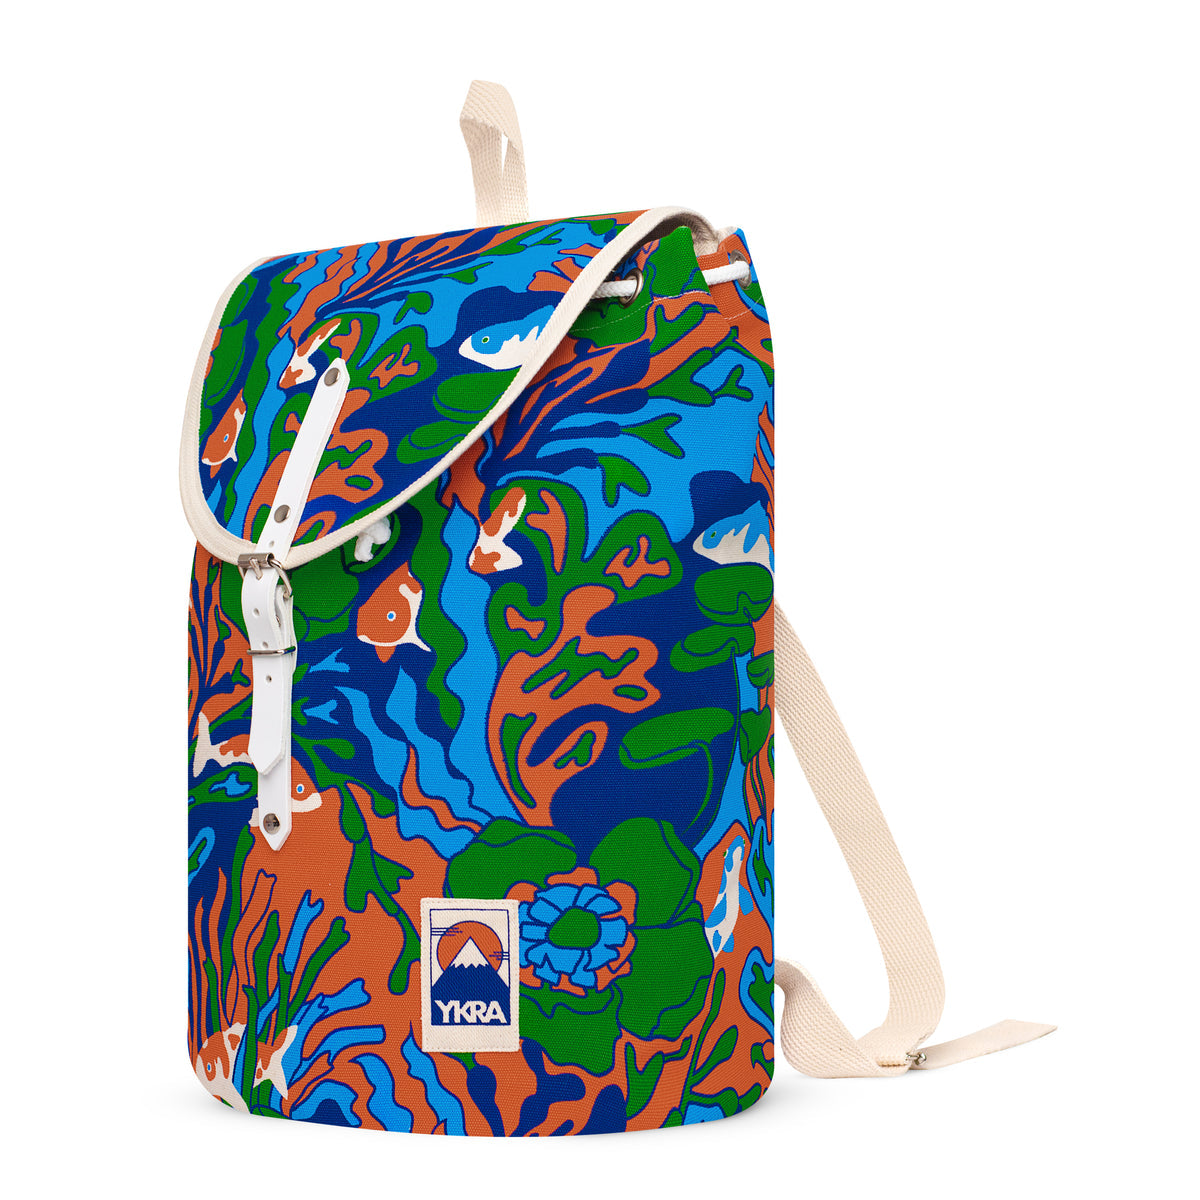 Ykra Trippy Fish Sailor Backpack